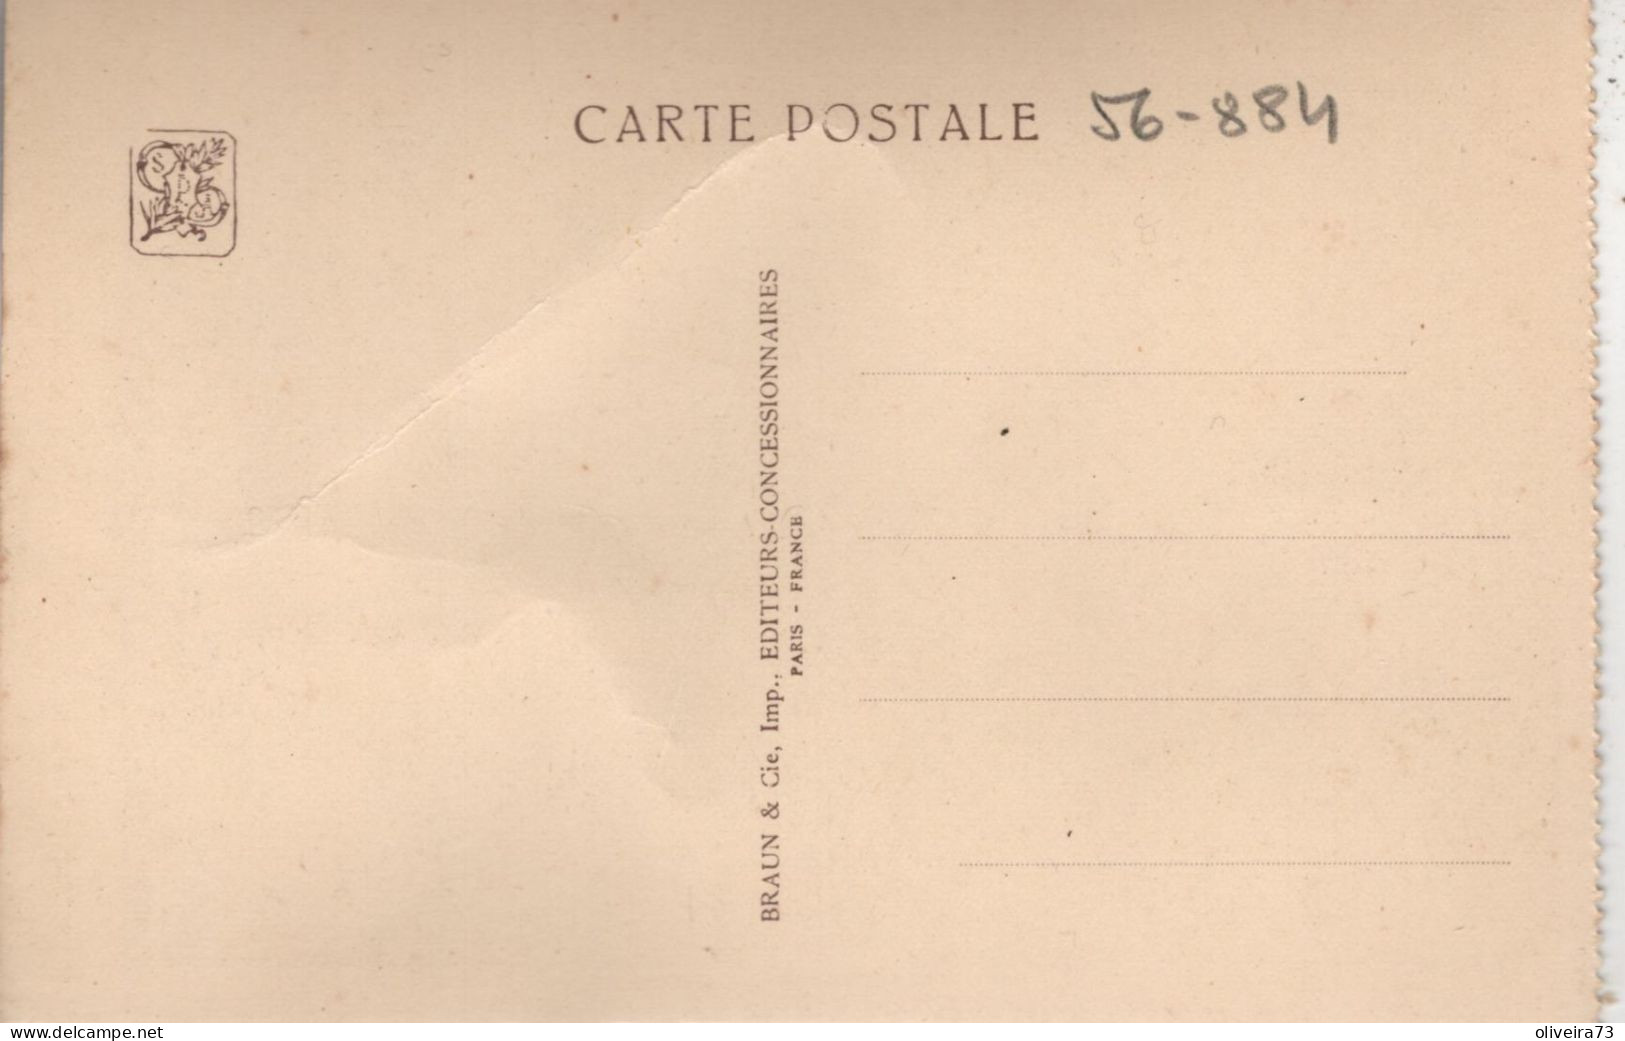 PARIS - Exposition Coloniale International 1931  - Cameroun-Togo -Grand Palais - Tentoonstellingen